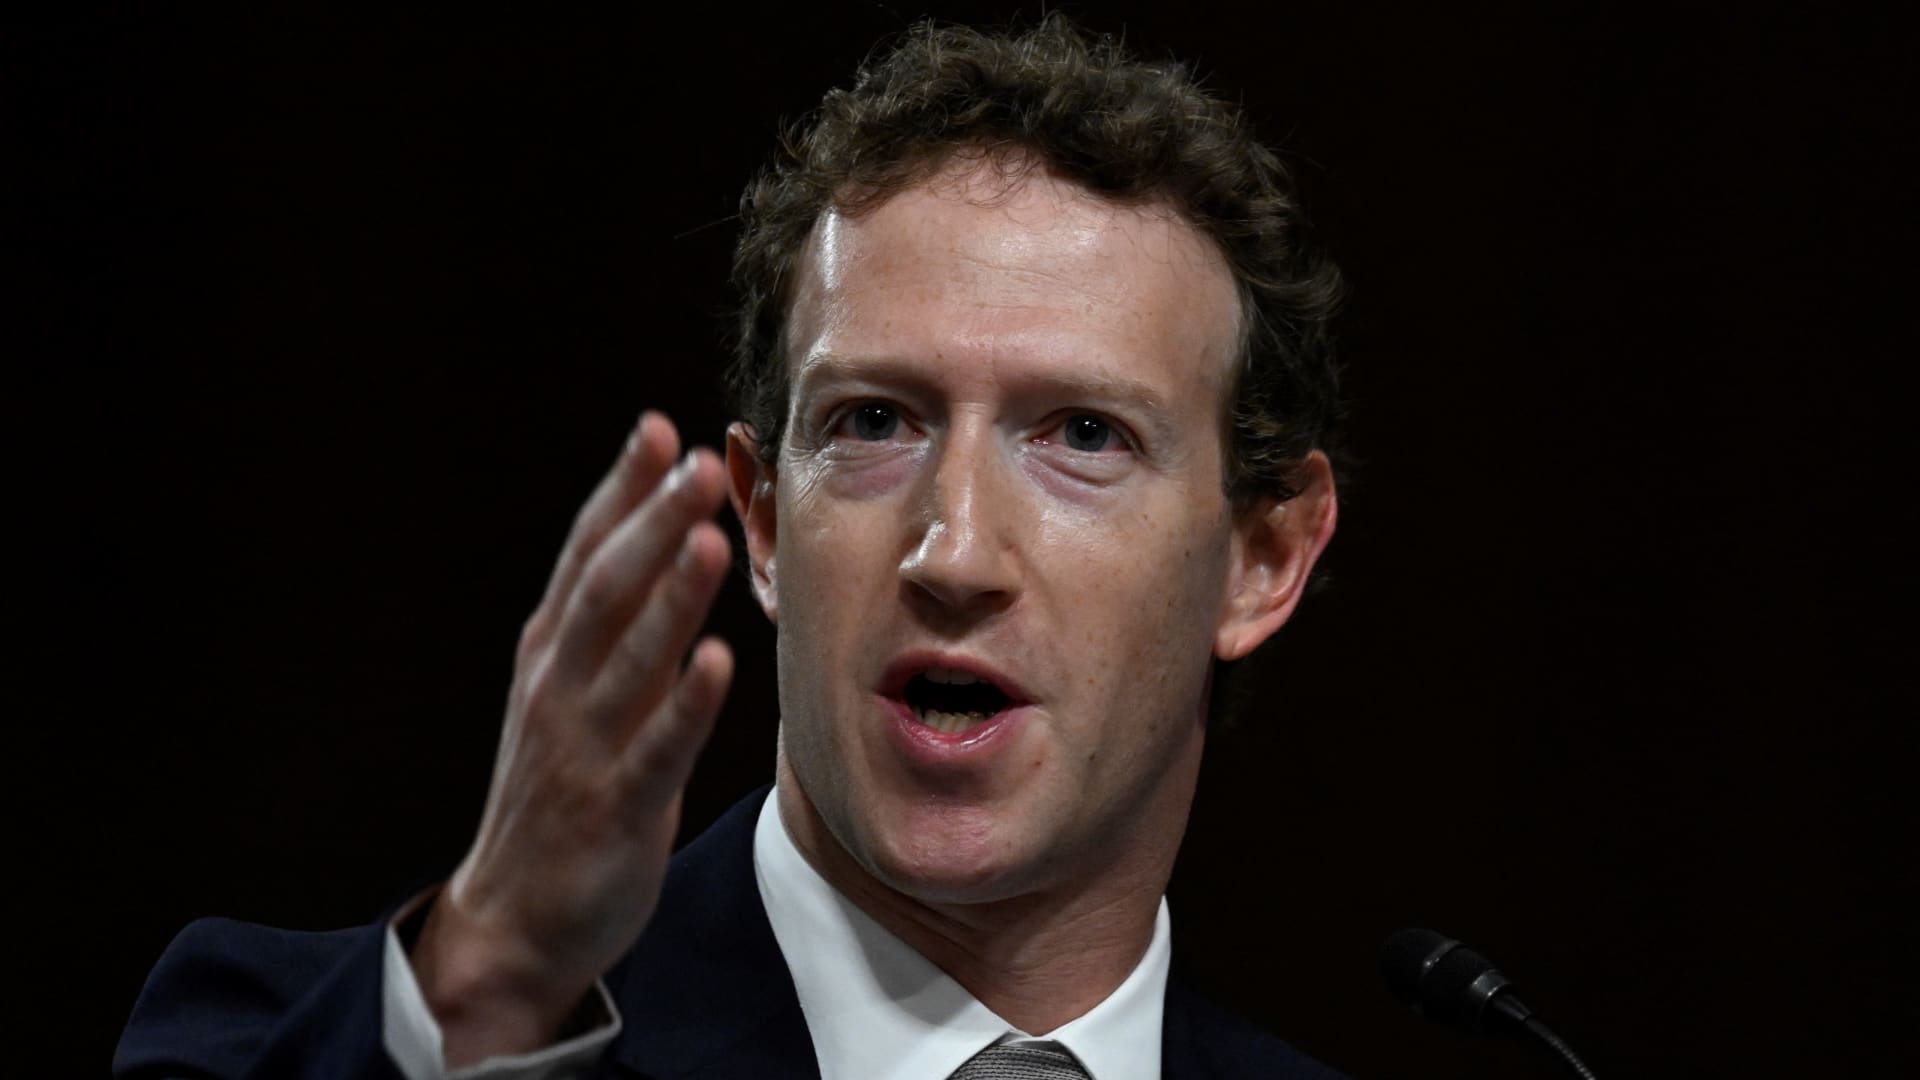 Meta tumbles 11% on weak revenue forecast and Zuckerberg's comments on spending